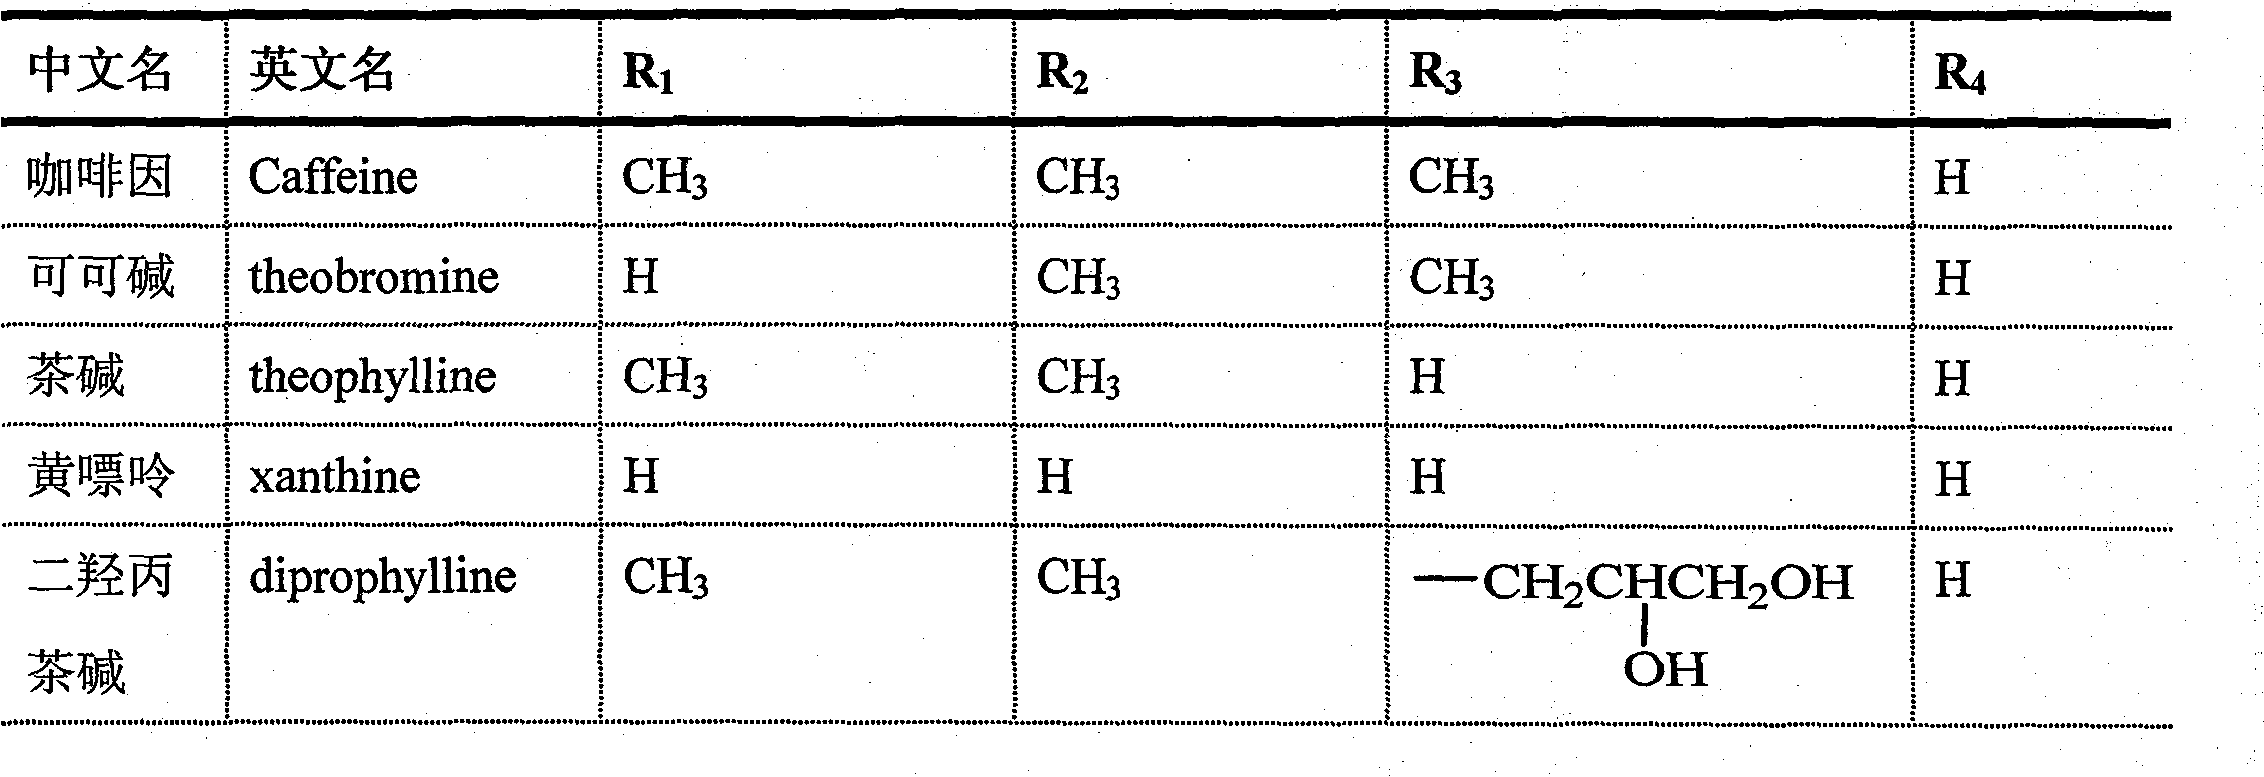 Pentoxifylline derivative